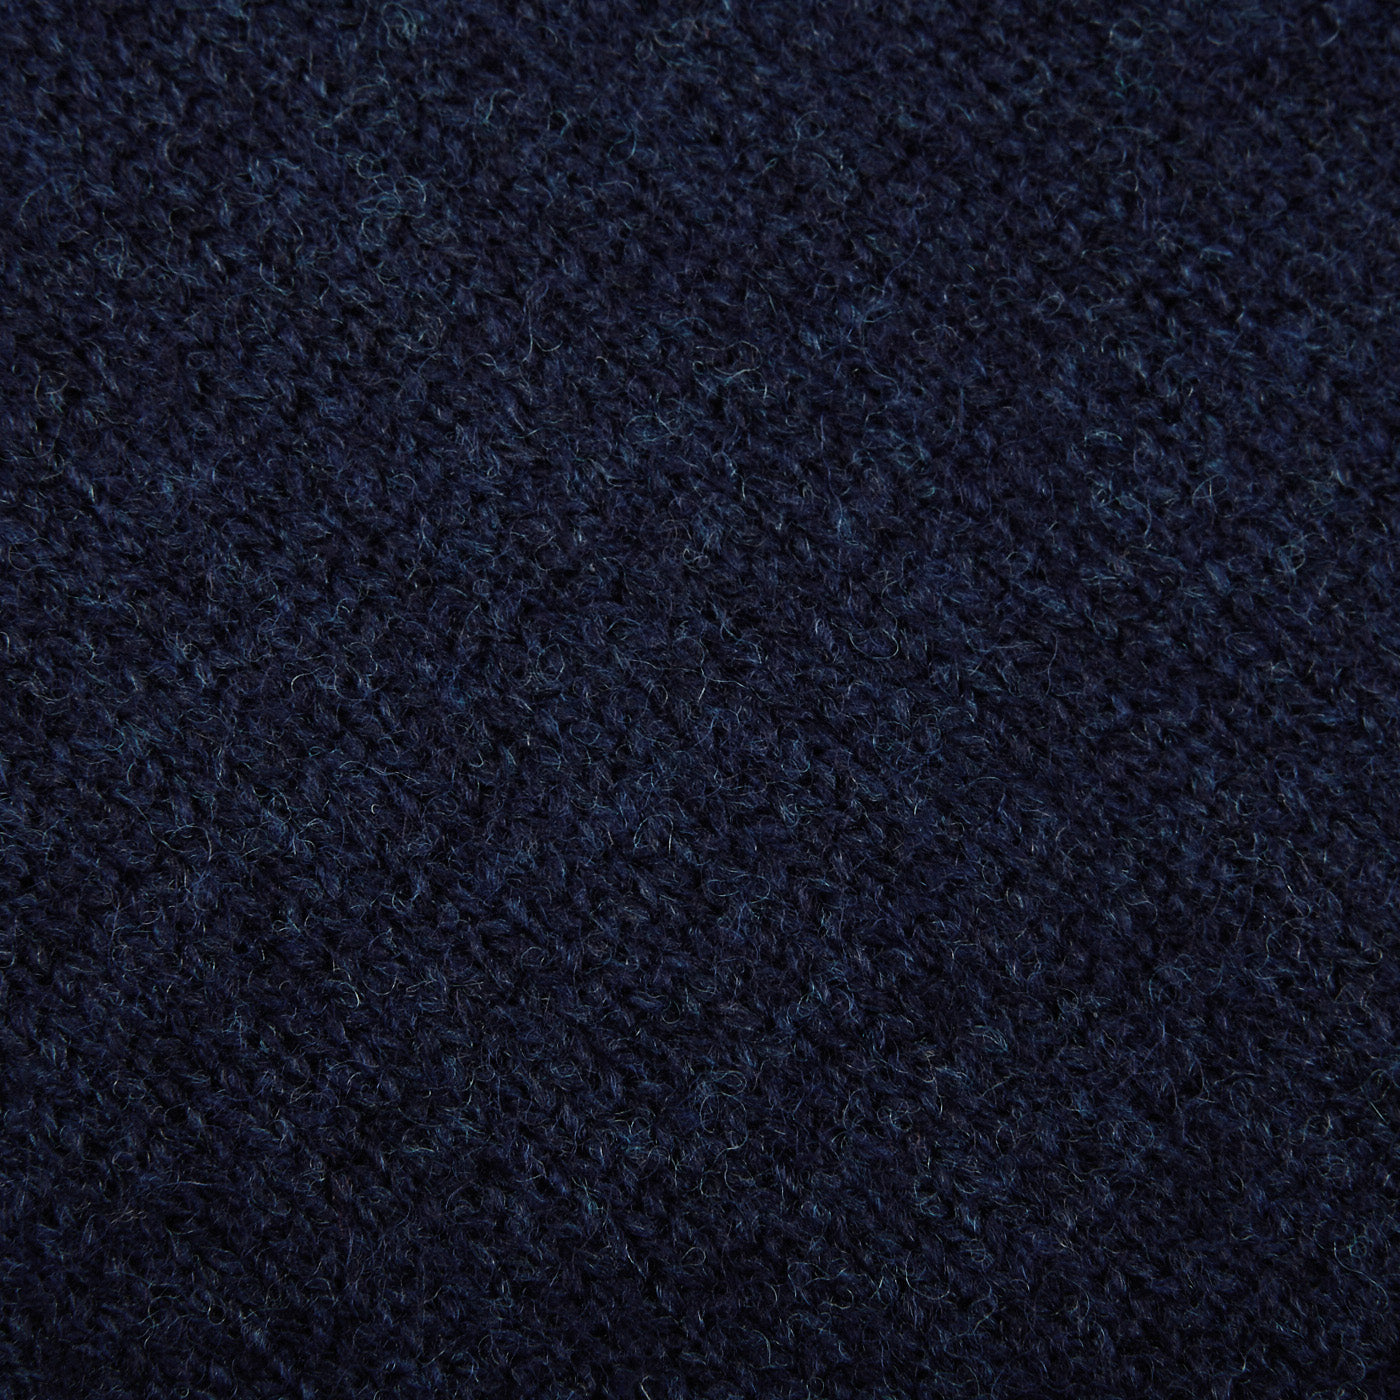 Alan Paine Indigo Blue Lambswool V-Neck Fabric